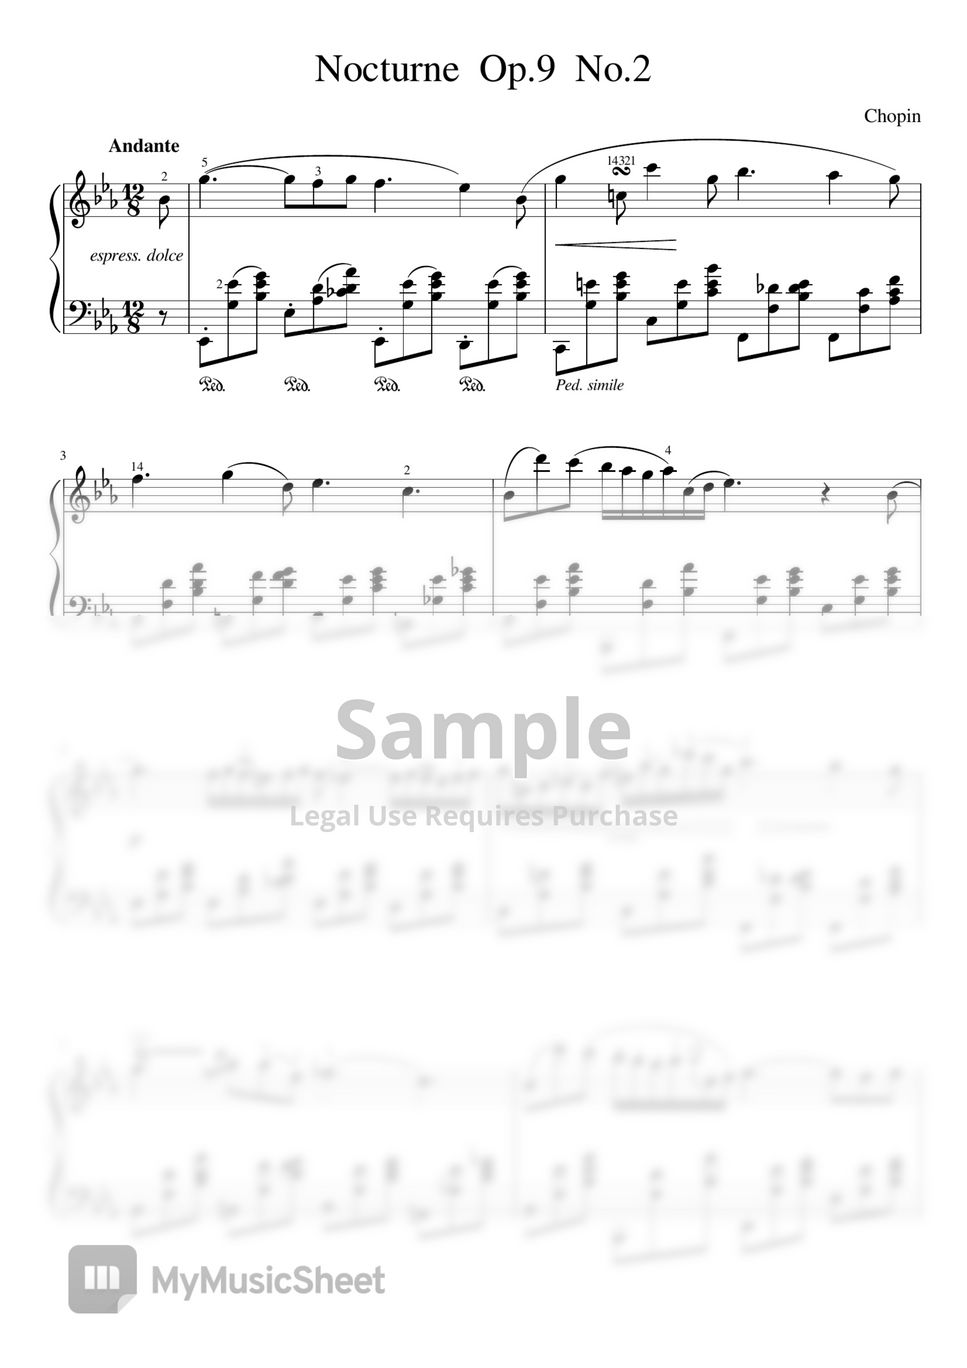 F. Chopin - Nocturne Op 9 No 2 E Flat Major by F. Chopin